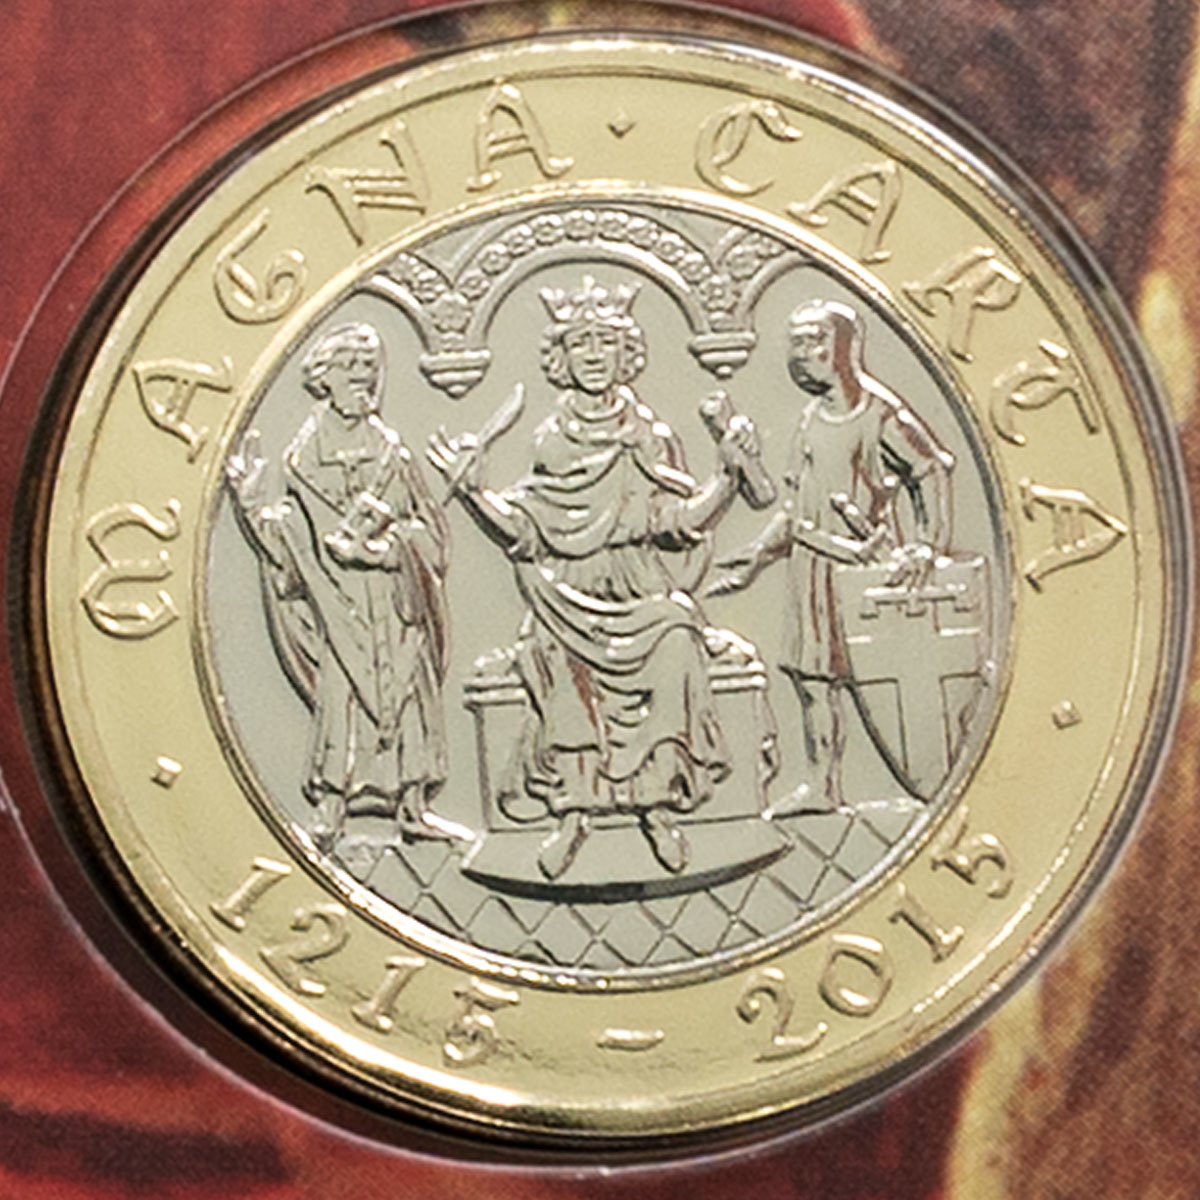 uk15mcbu-the-magna-carta-800th-anniversary-£2-coin-bu-002-m